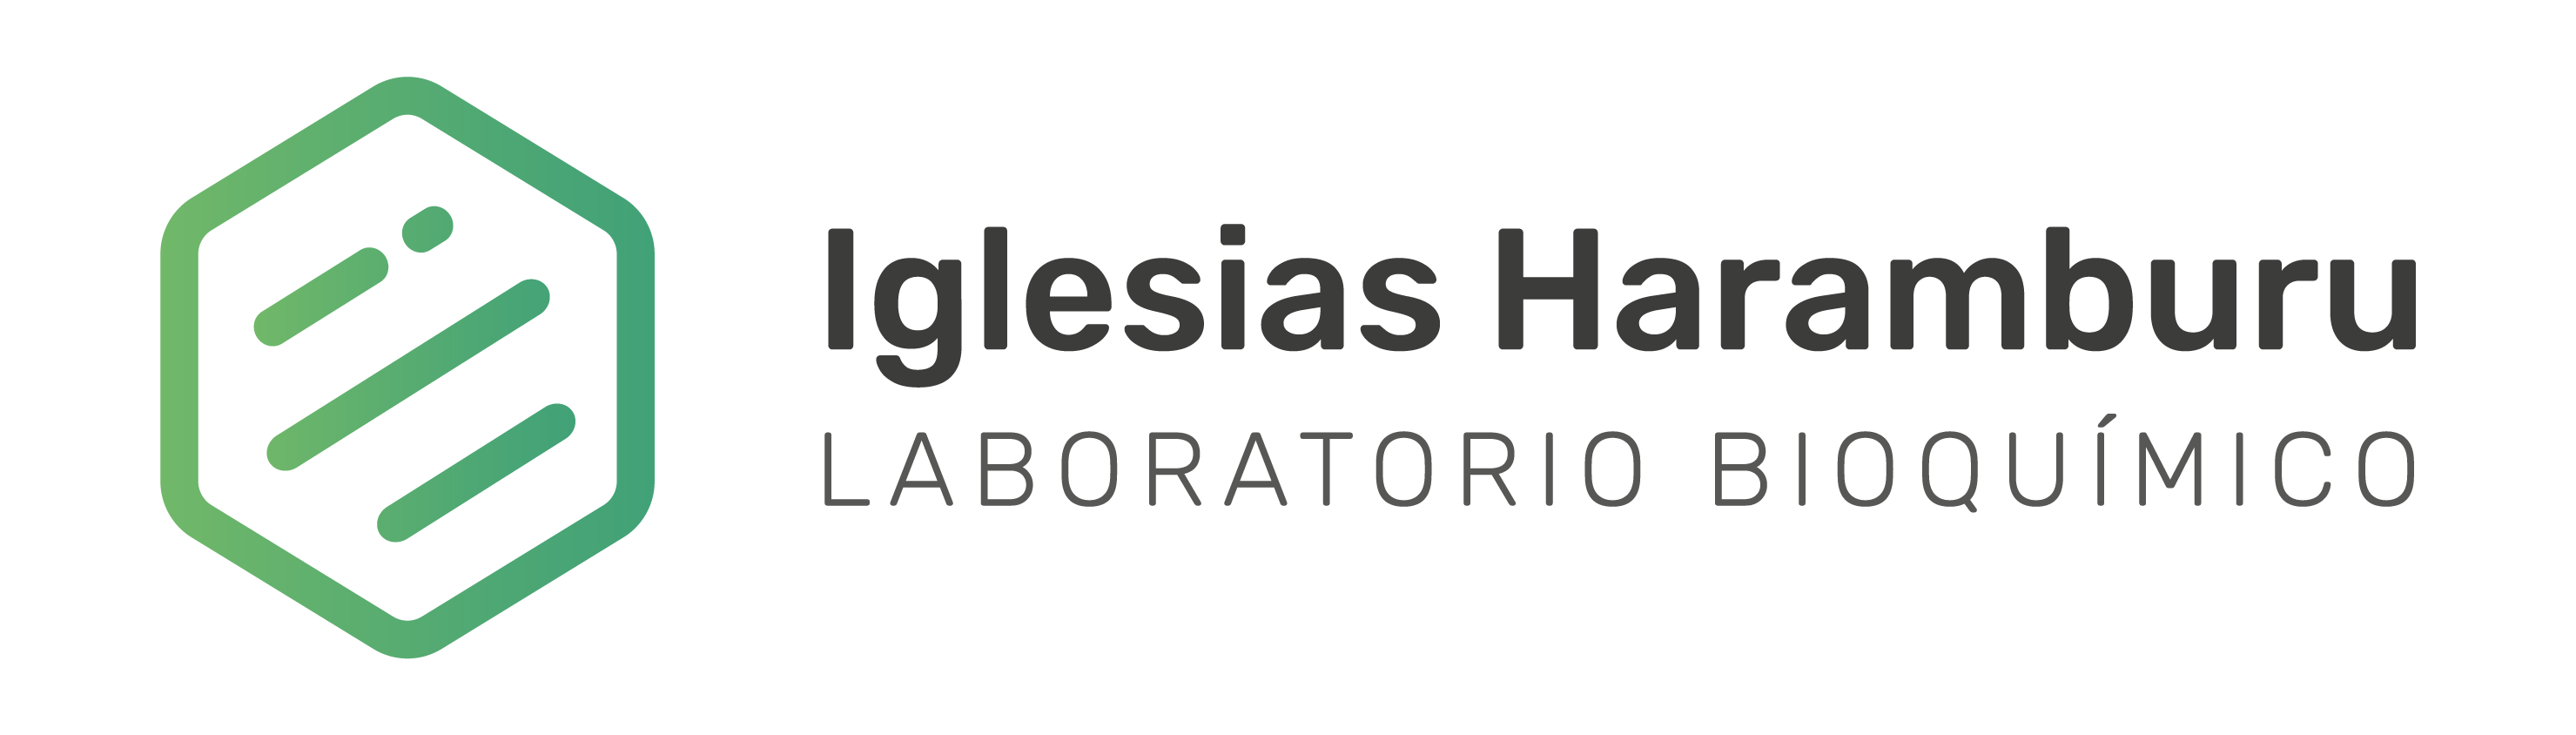 Laboratorio Bioquímico Iglesias/Haramburu